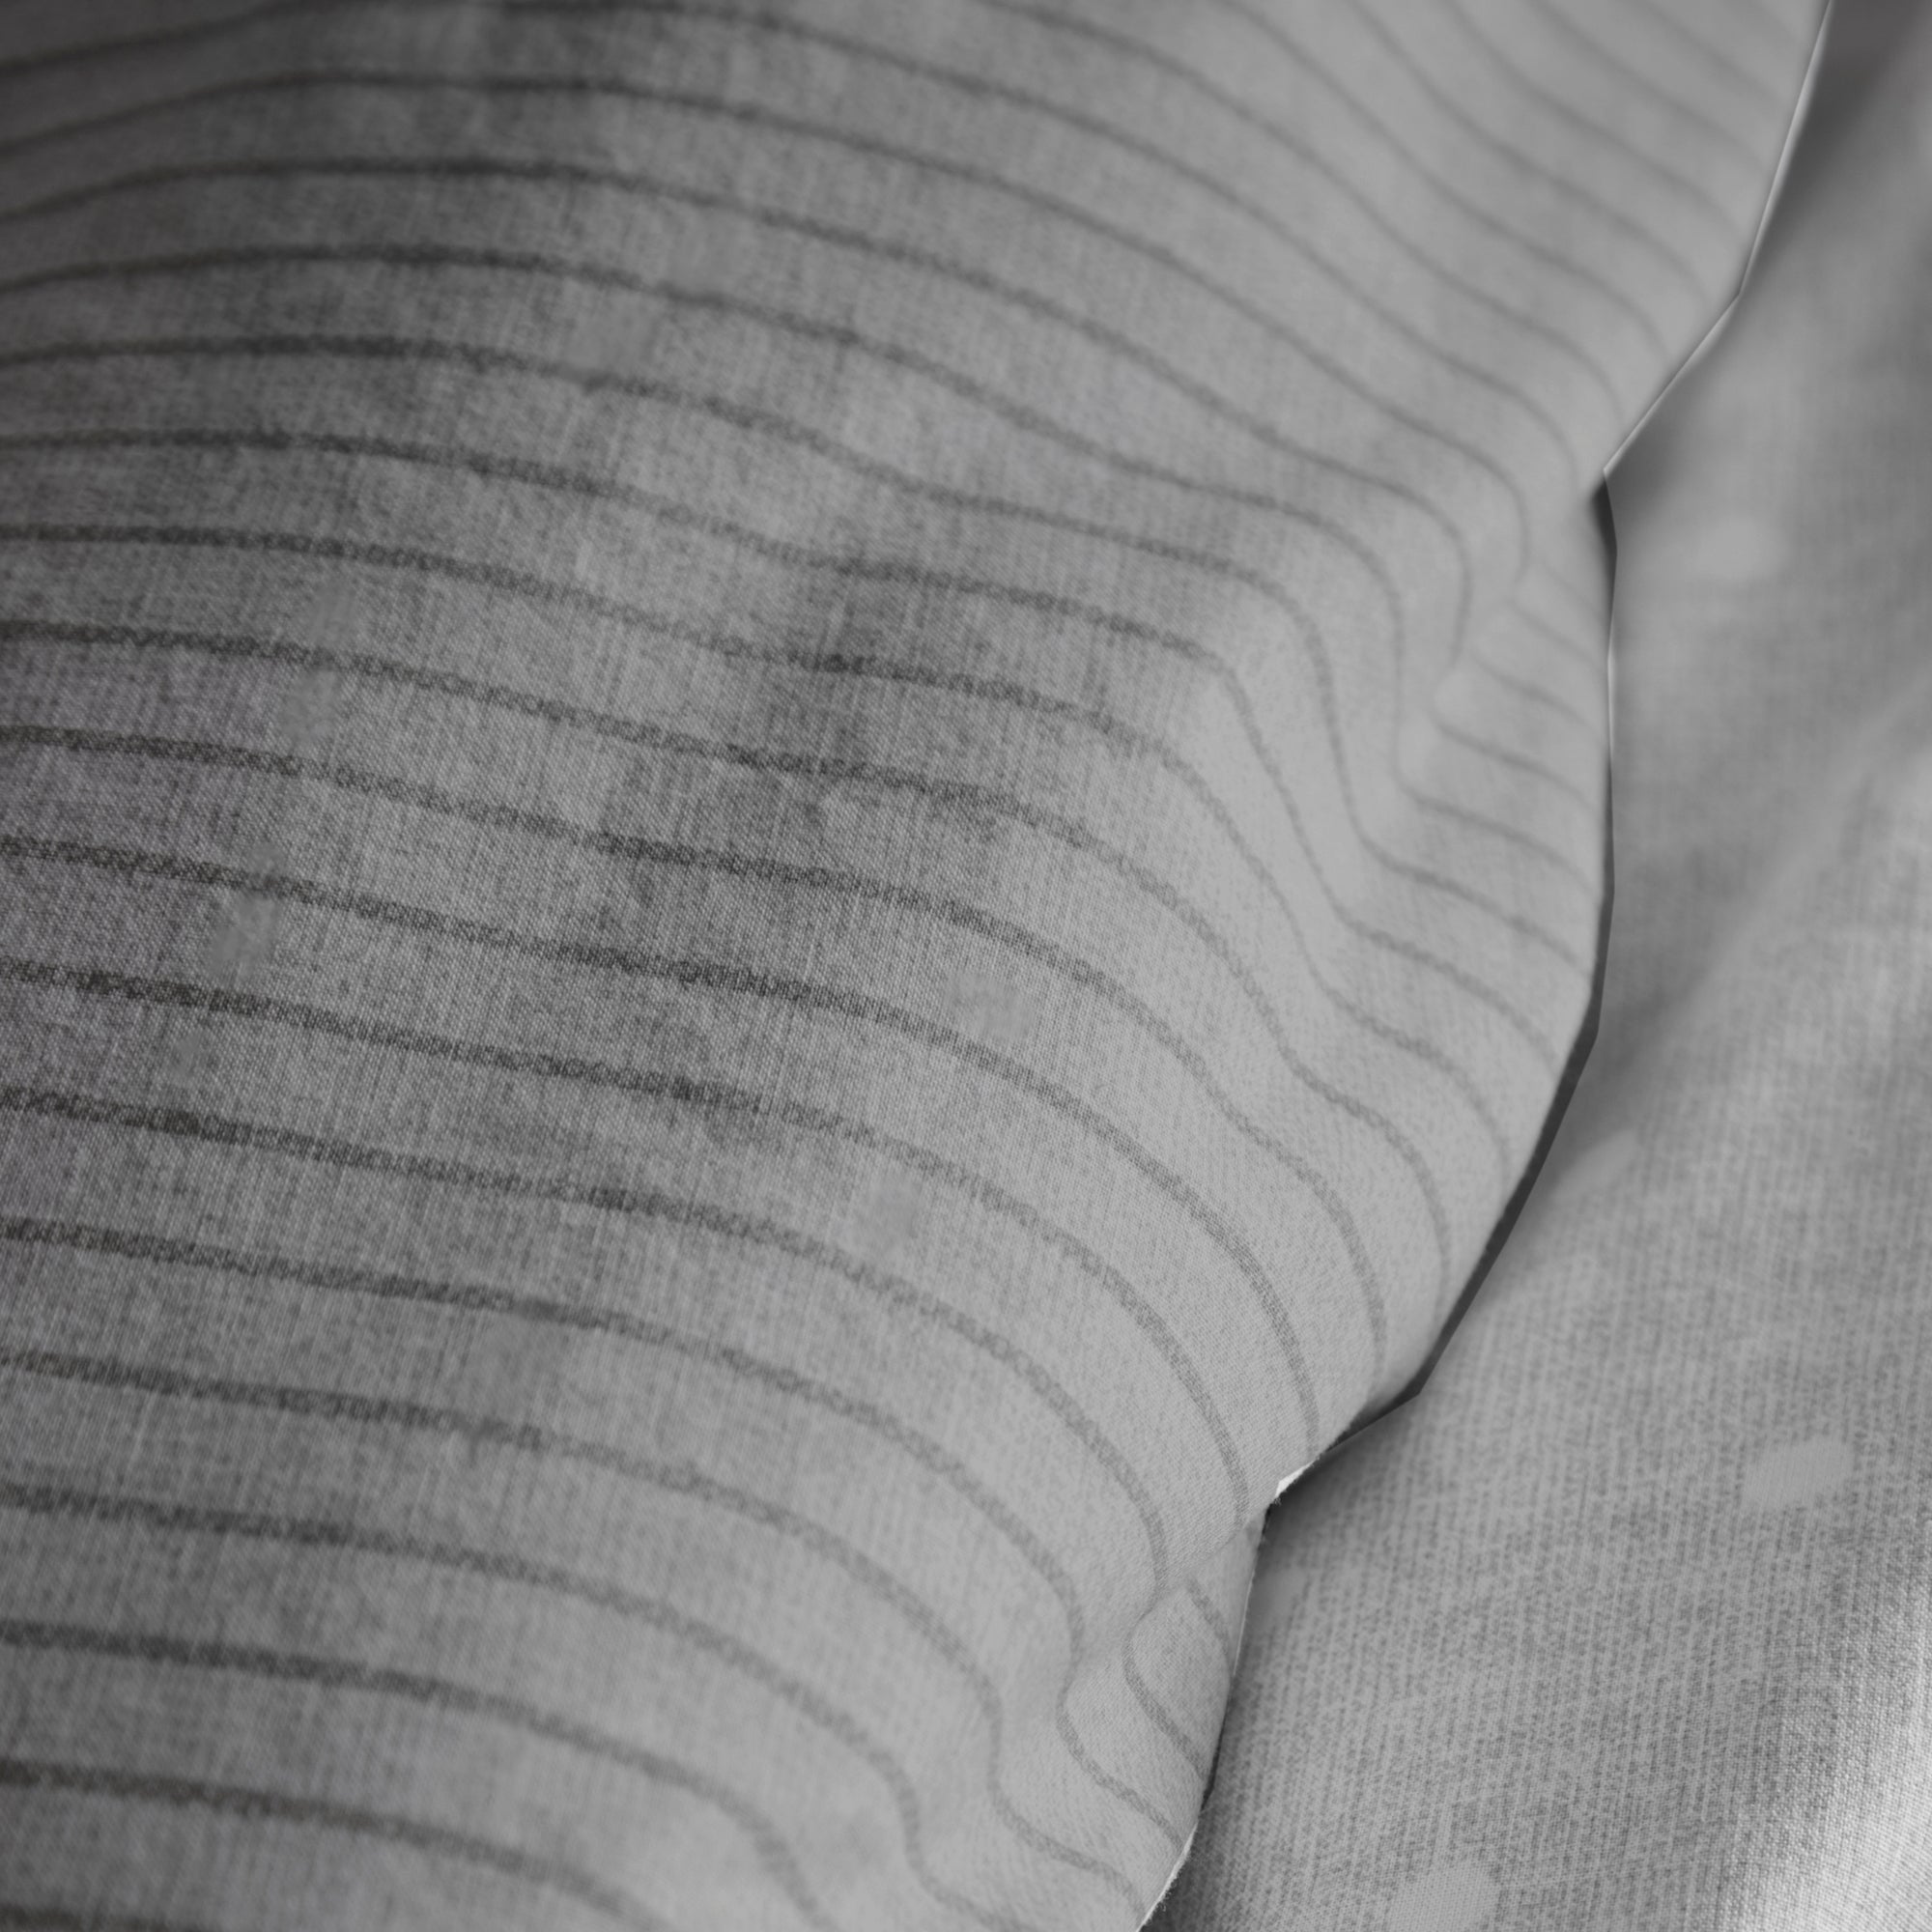 Trenton Spot - 100% Cotton Duvet Cover Set in Grey - by Appletree Loft